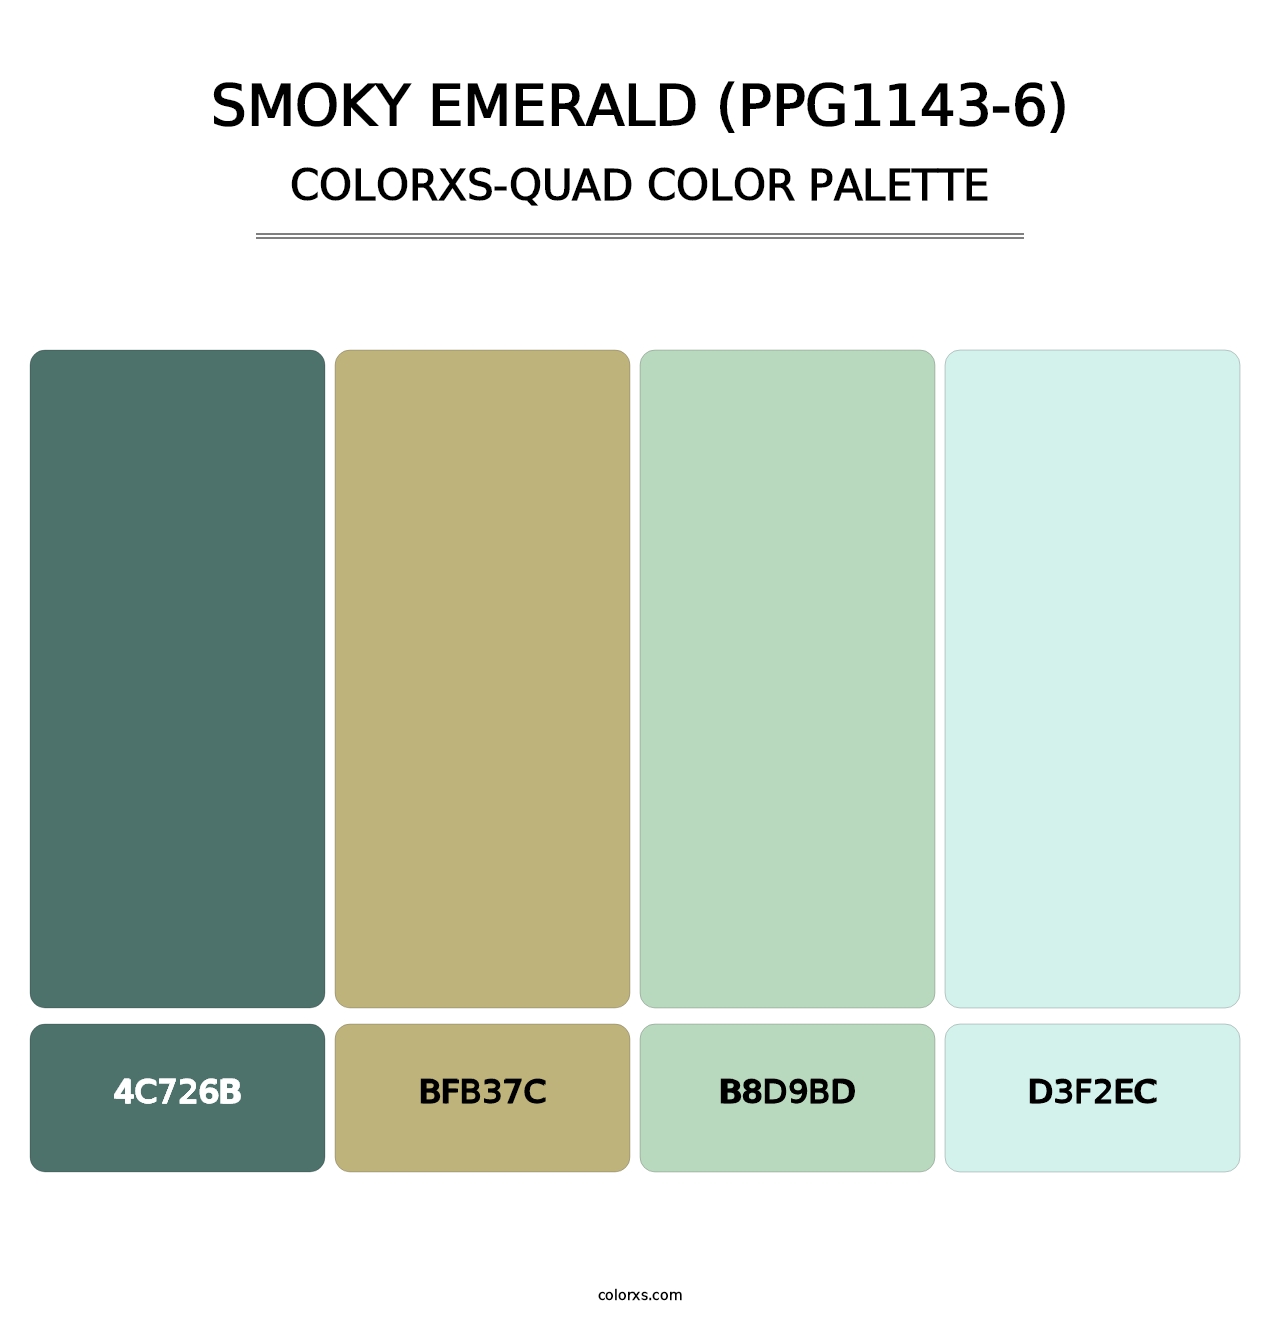 Smoky Emerald (PPG1143-6) - Colorxs Quad Palette